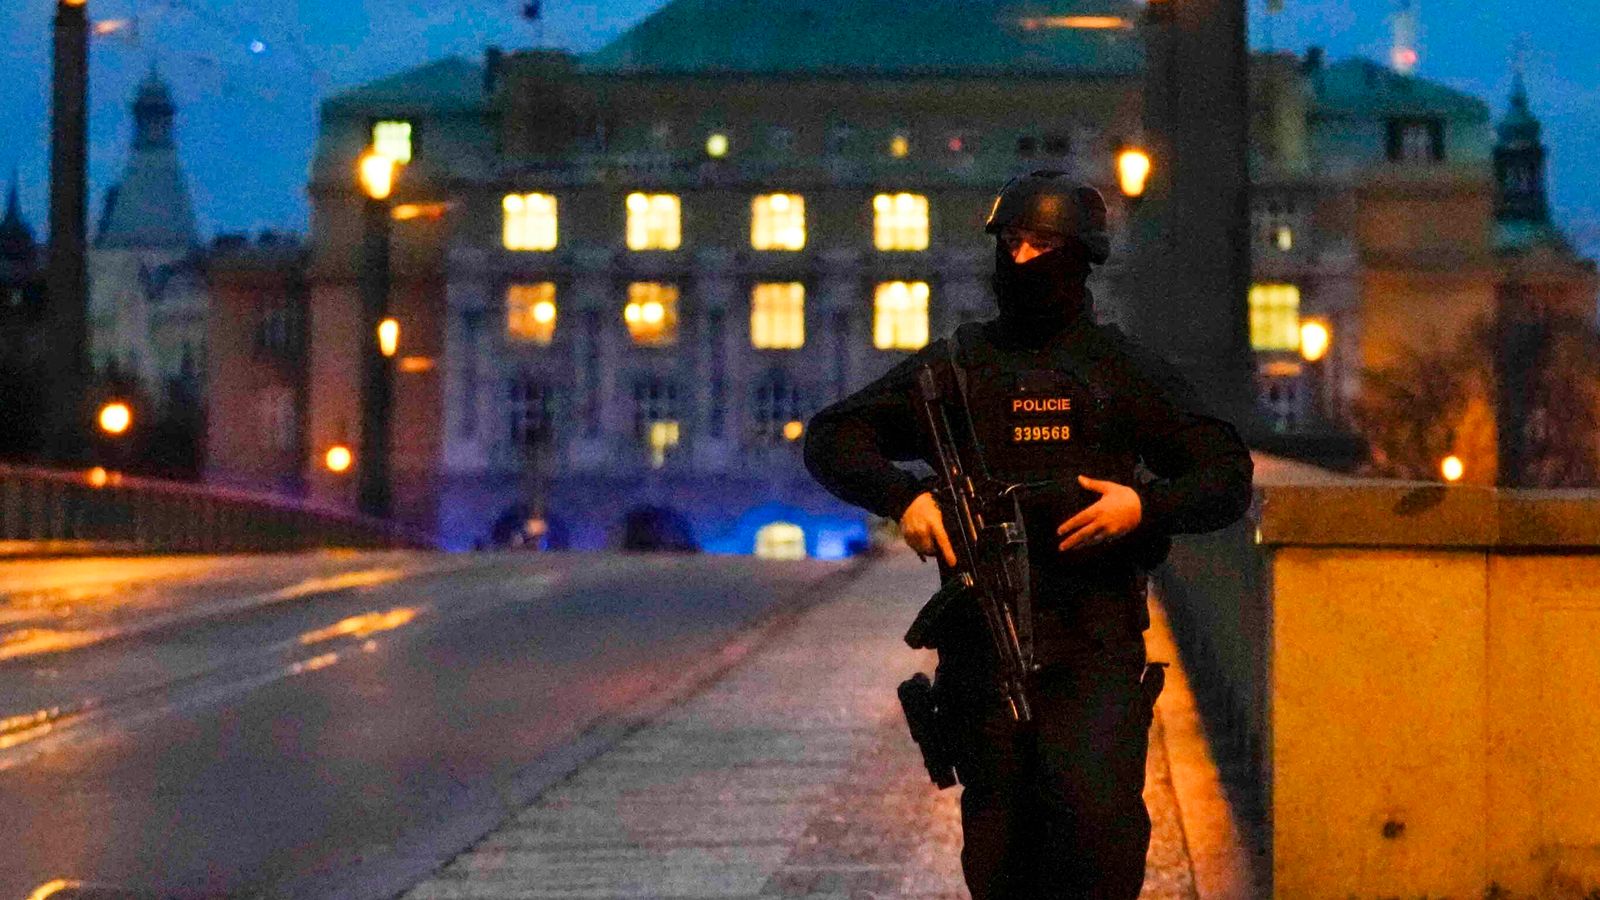 Prague shooting: 15 dead in Prague shooting, including gunman, emergency services say